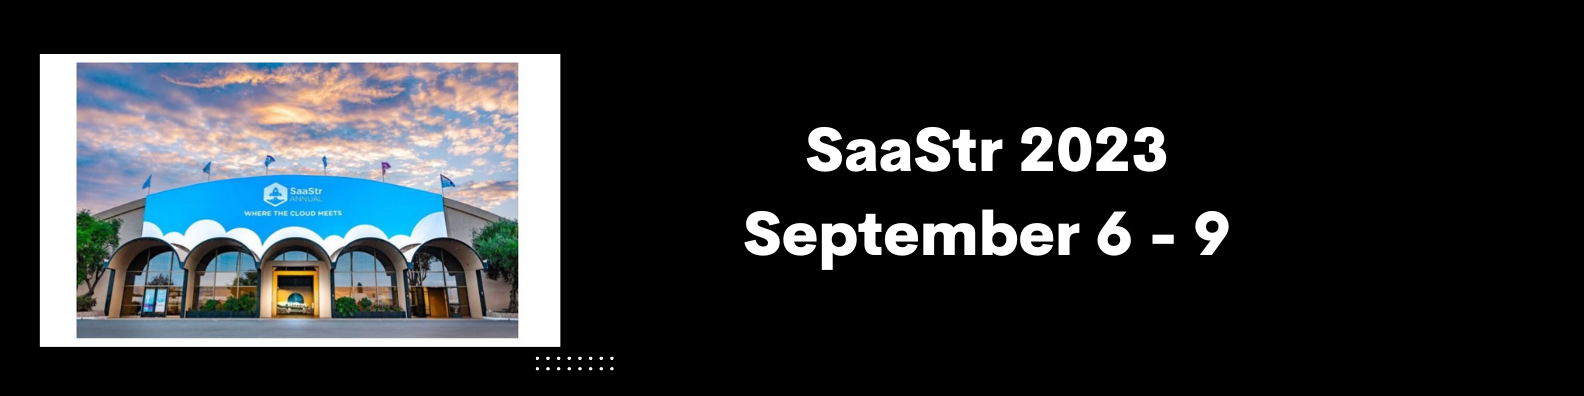 Join us at SaaStr 2023